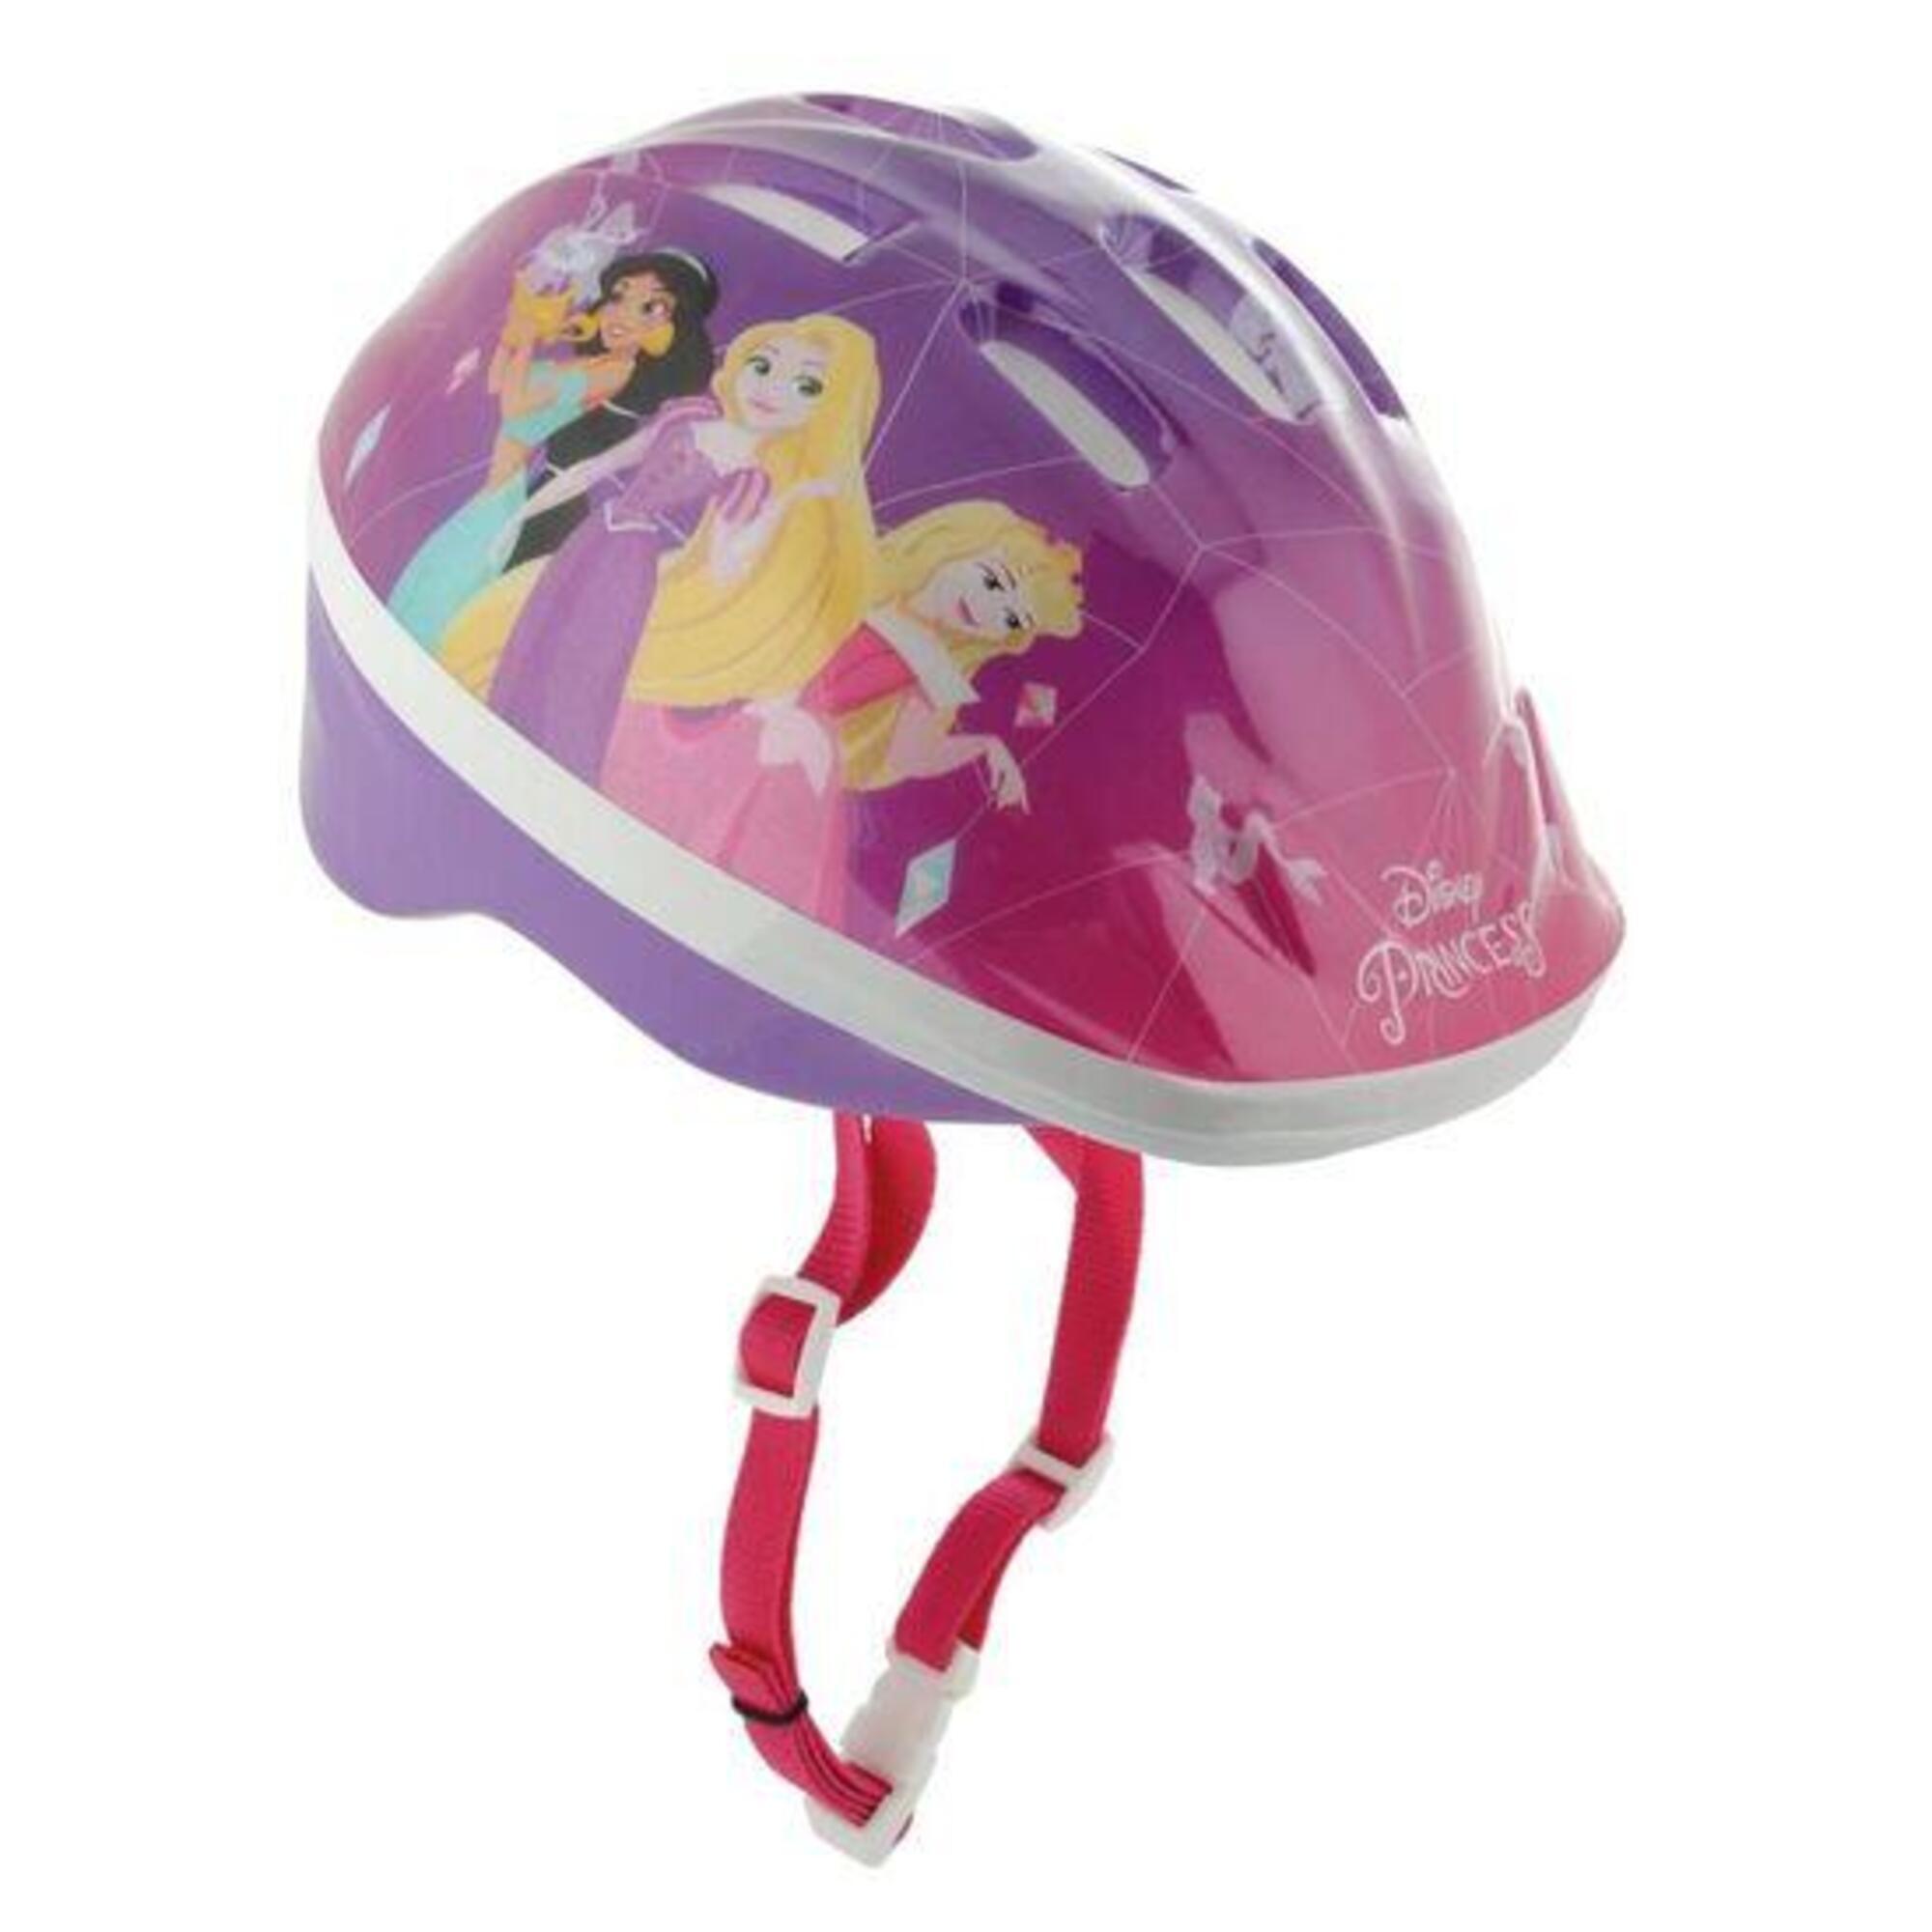 Disney Princess Safety Helmet - 48-52cm 4/5